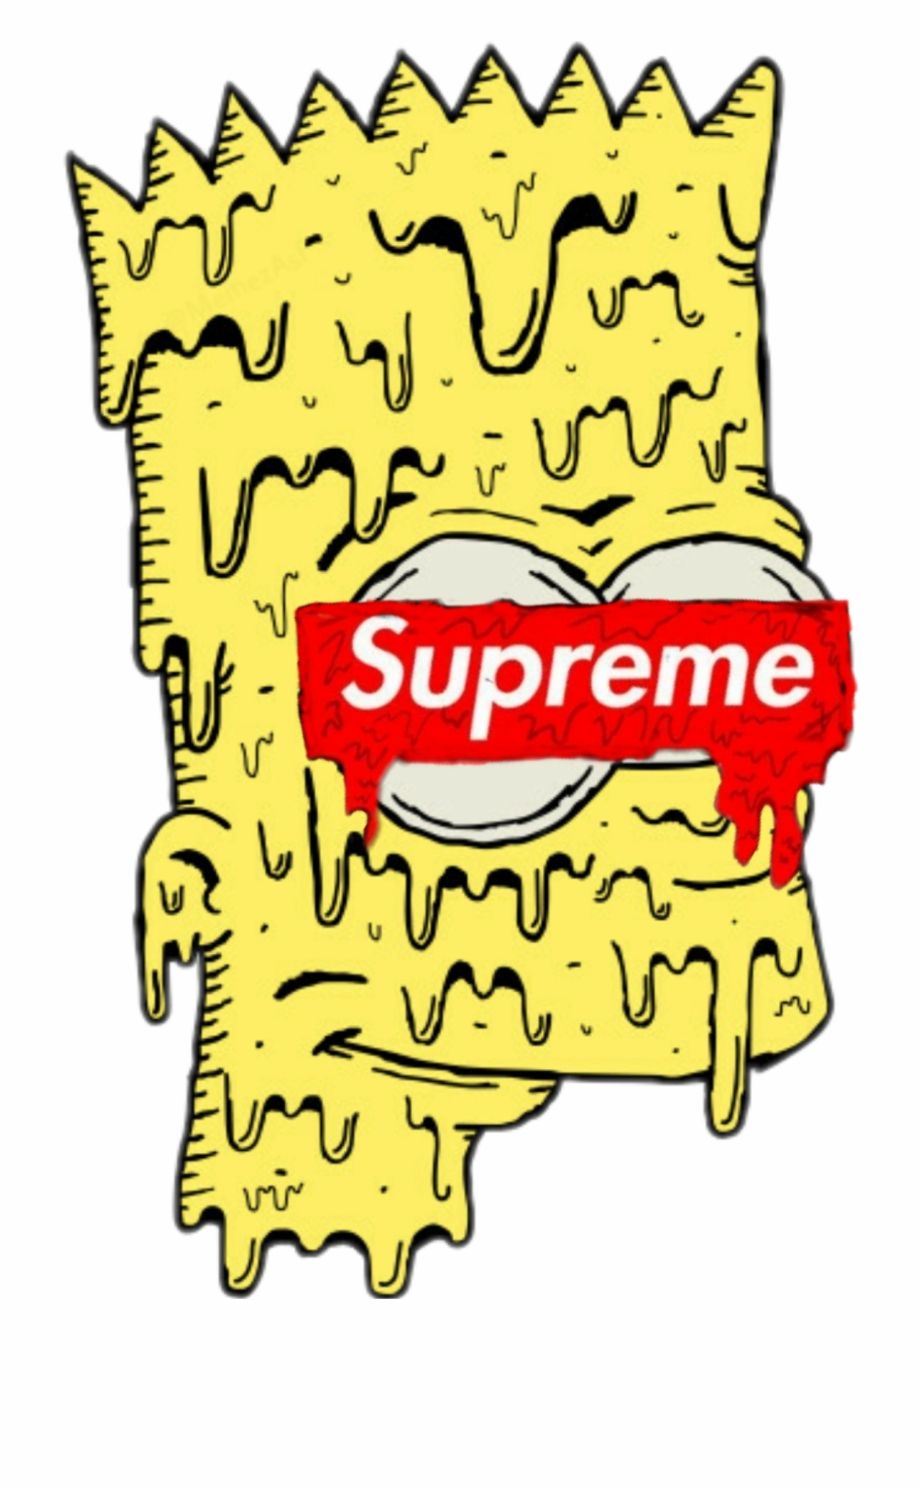 Bart Simpson XXXtentacion Wallpapers - Wallpaper Cave